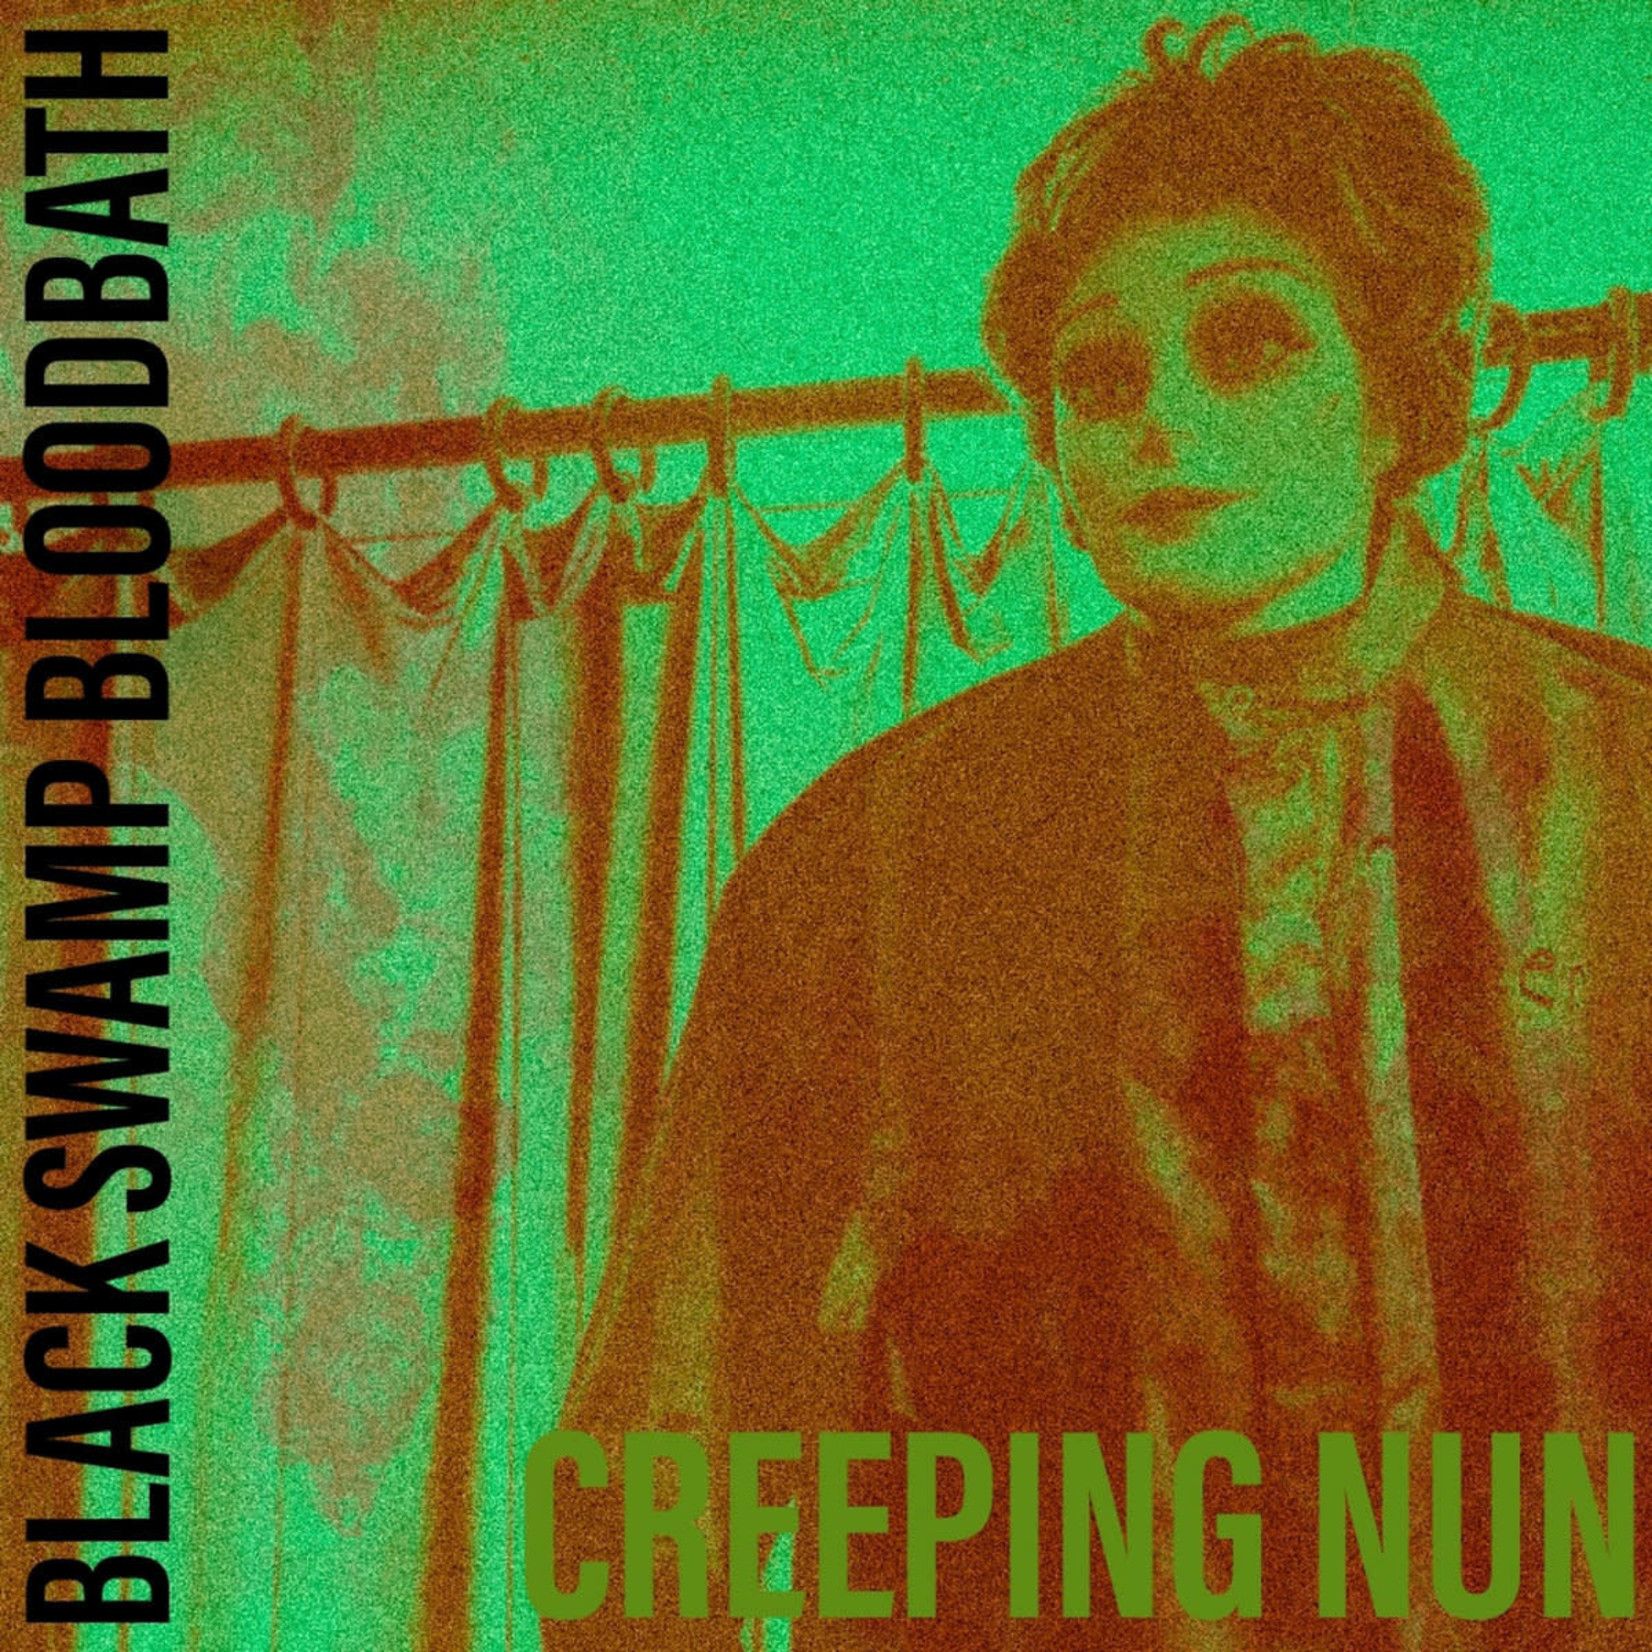 Toledo Creeping Nun - Black Swamp Bloodbath (CD)